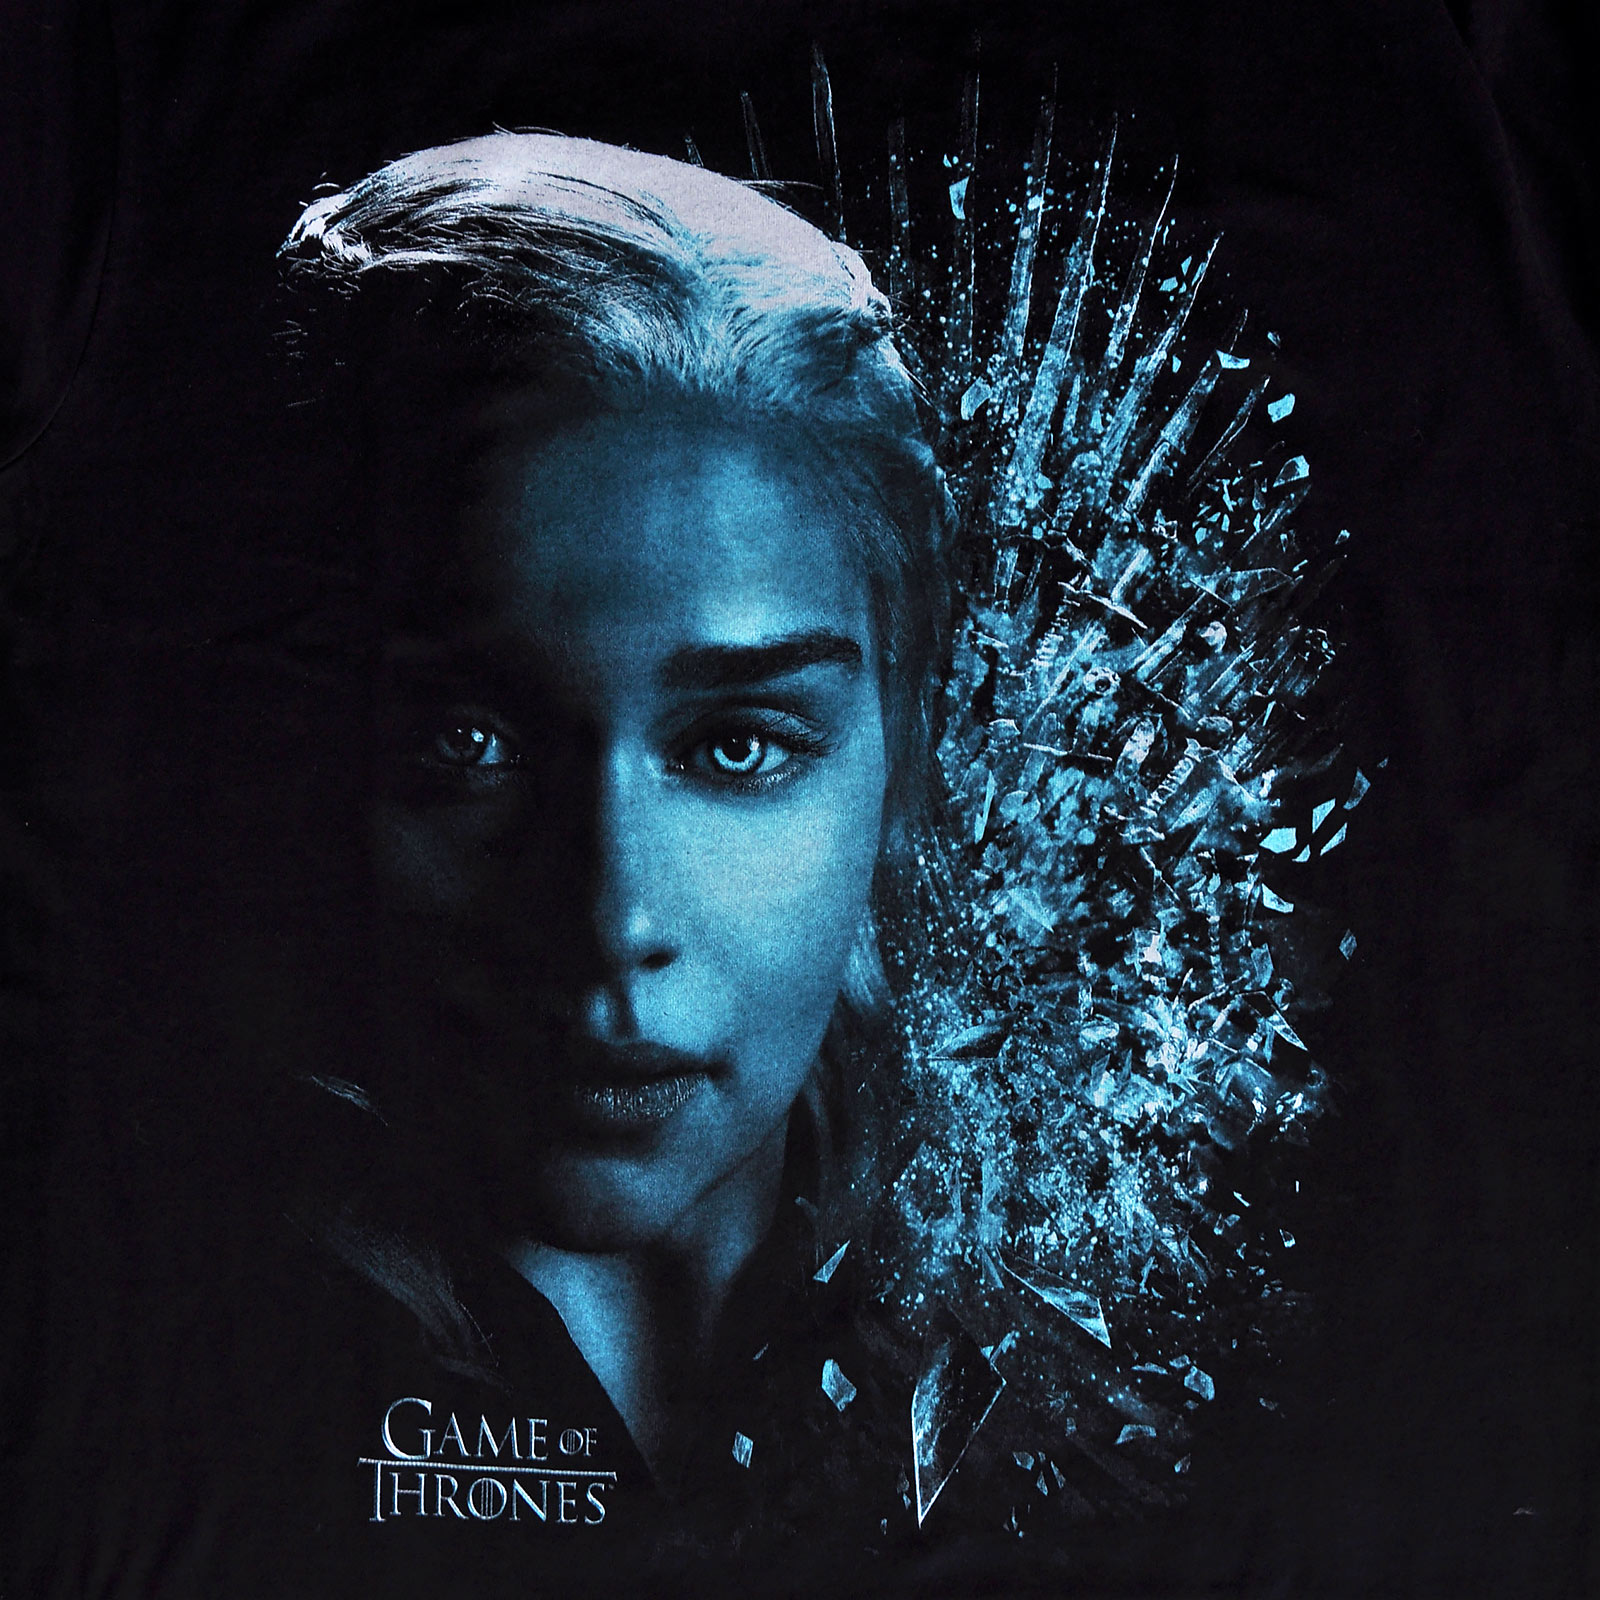 Game of Thrones - Daenerys Winter is Hier T-Shirt zwart